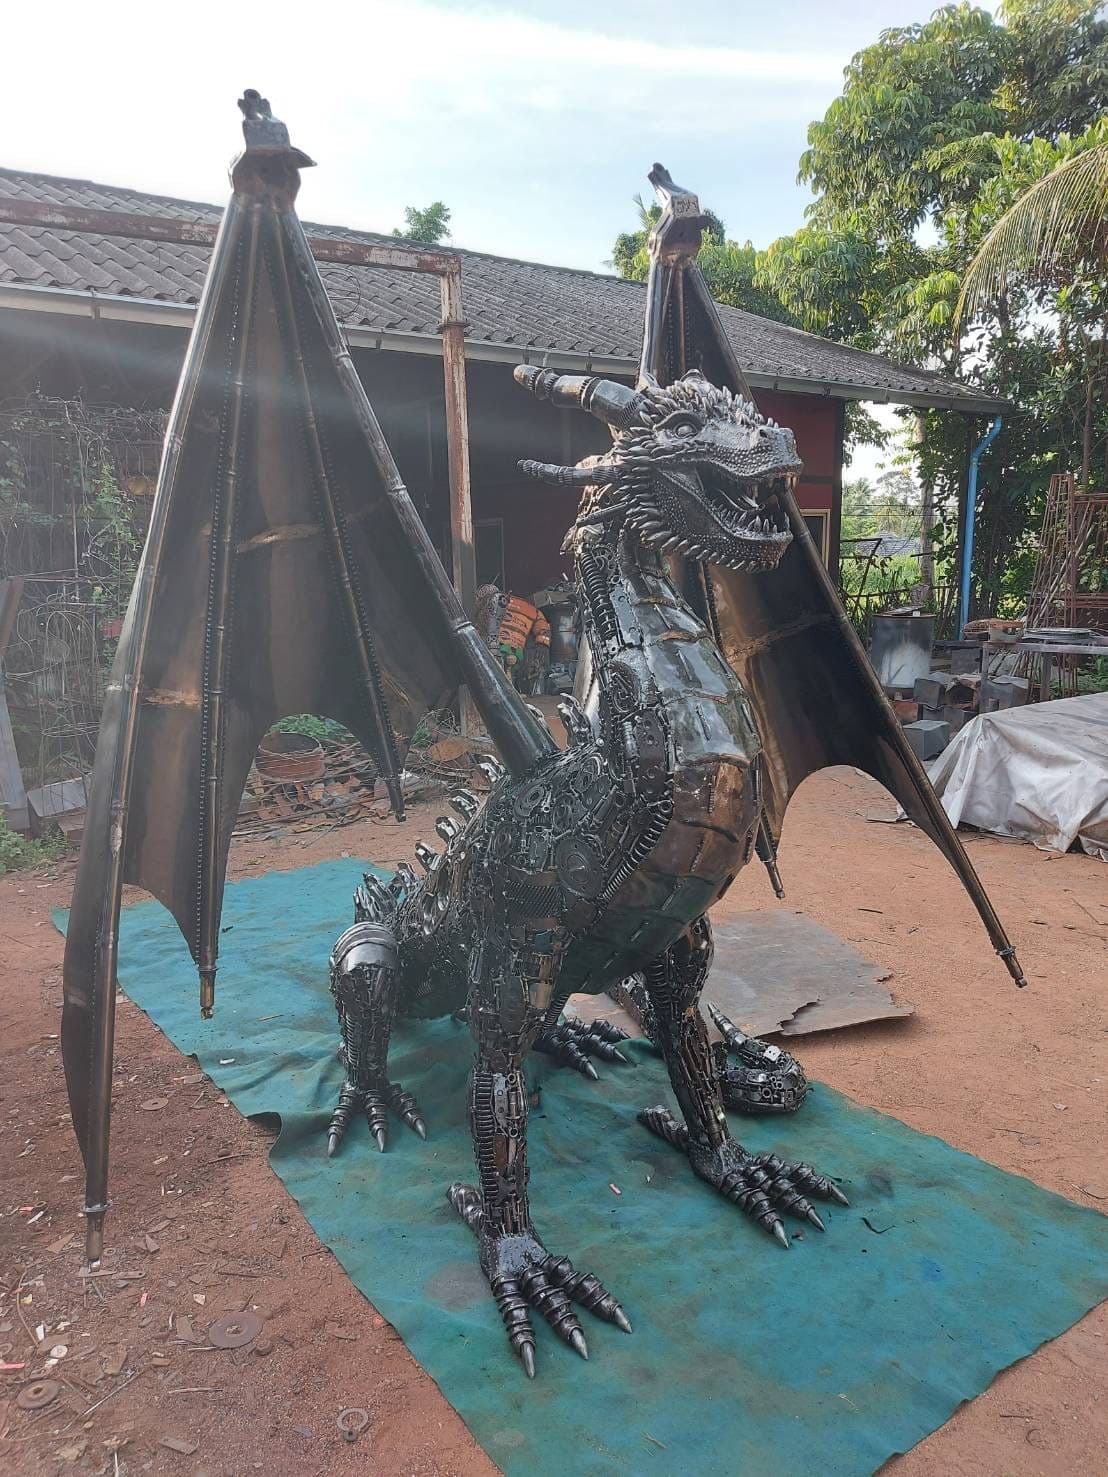 Kalifano Recycled Metal Art KALIFANO 86” Dragon Recycled Metal Art Sculpture RMS-DRAG180-N01